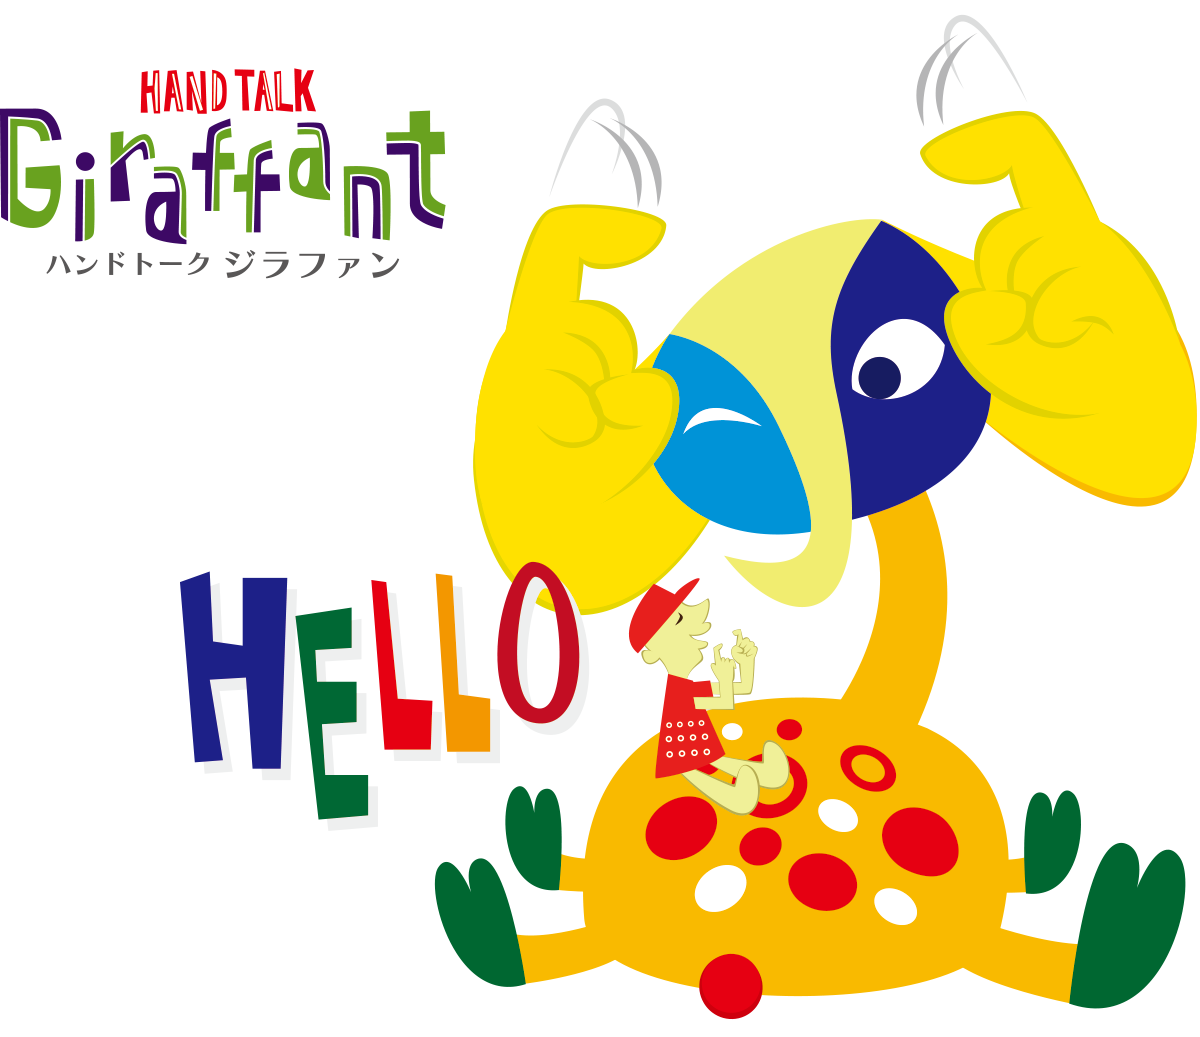 giraffant-hp-hello